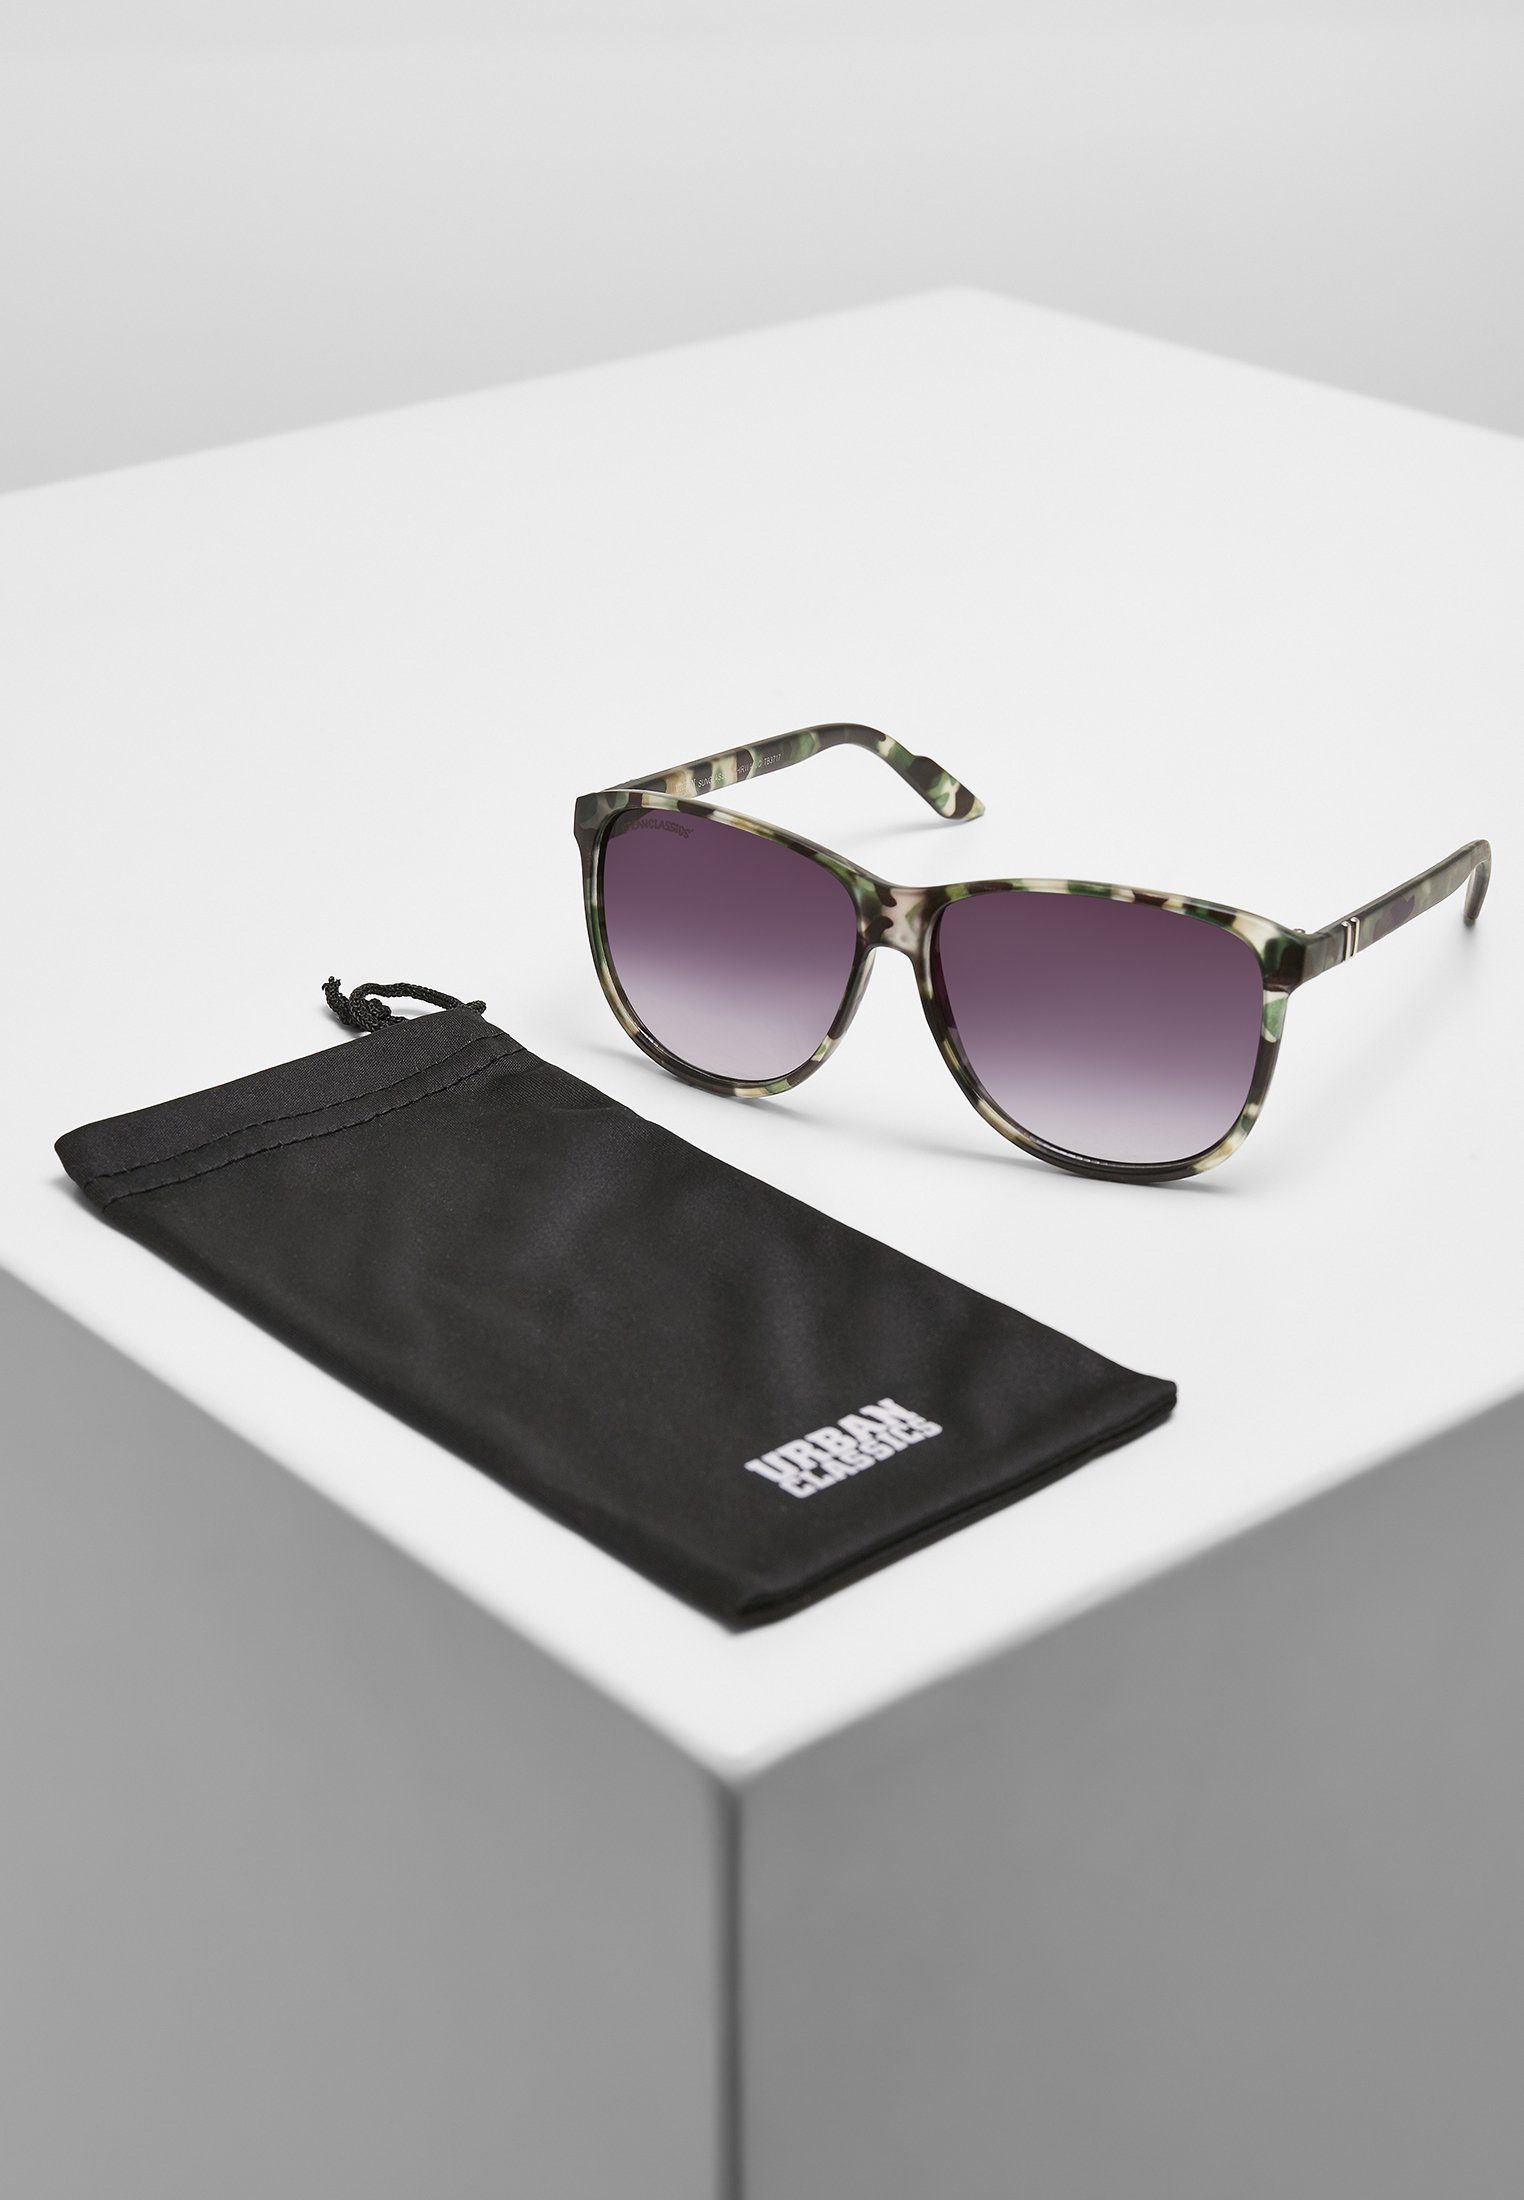 URBAN UC camo CLASSICS Sunglasses Sonnenbrille Chirwa Accessoires